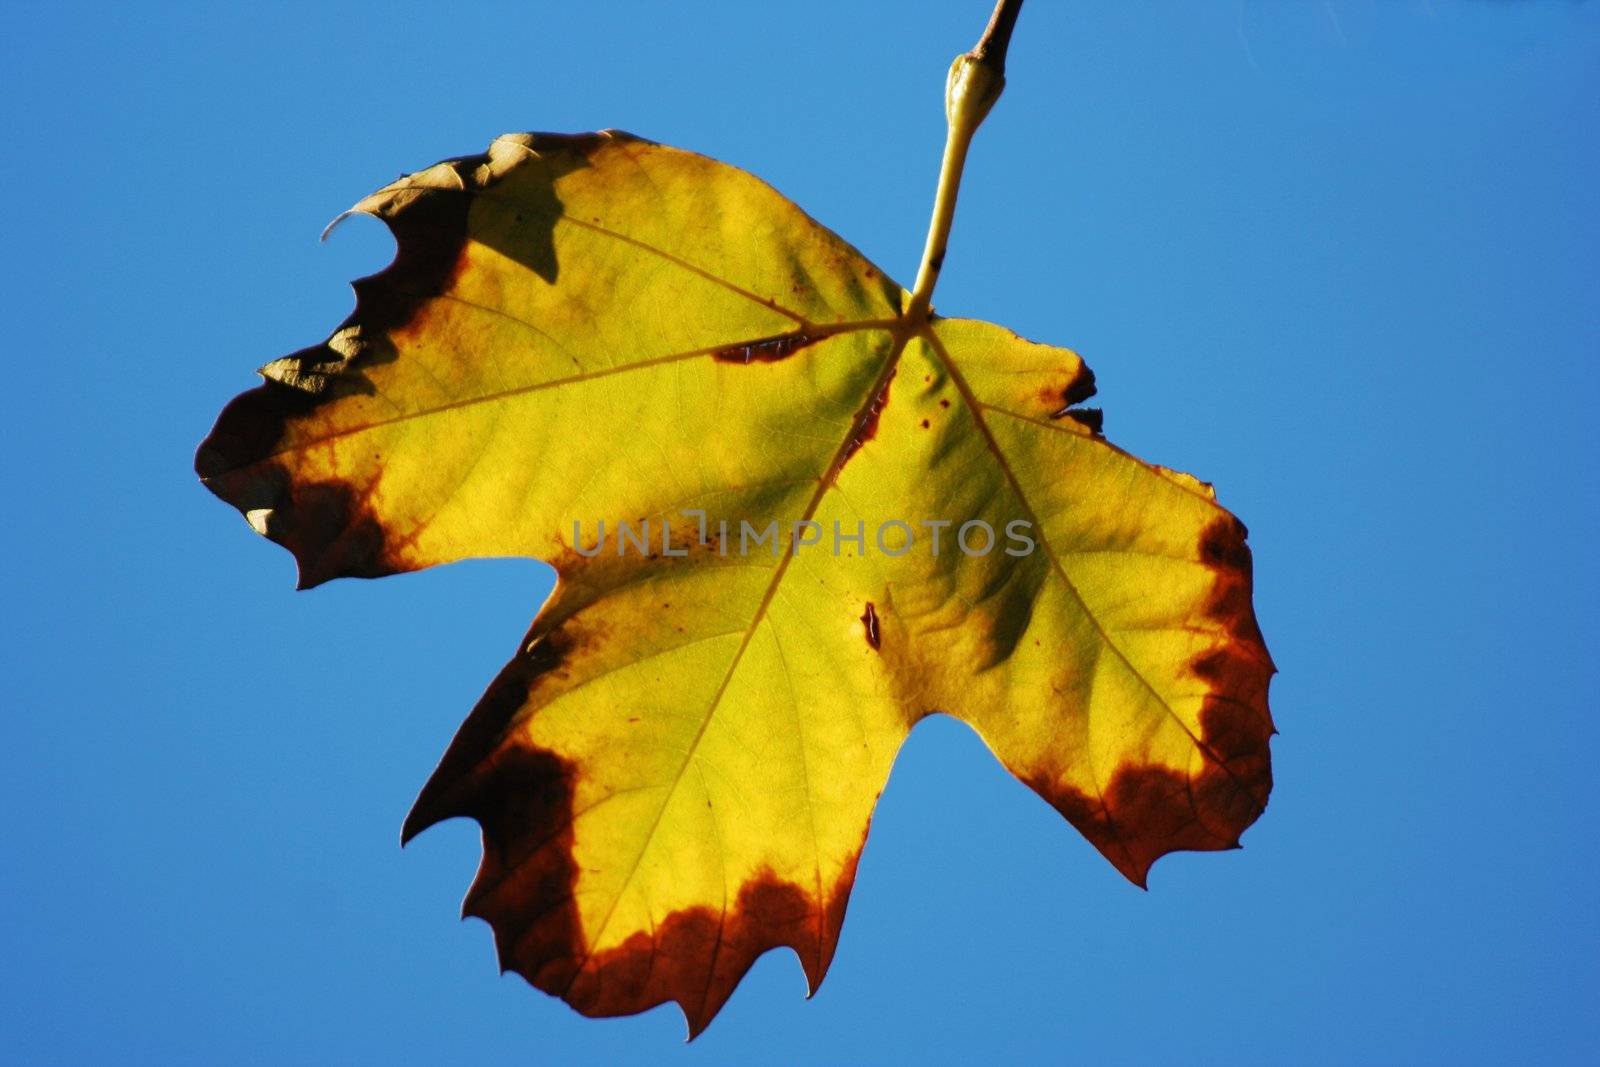 Backlit leaf of an oak tree against a blue sky